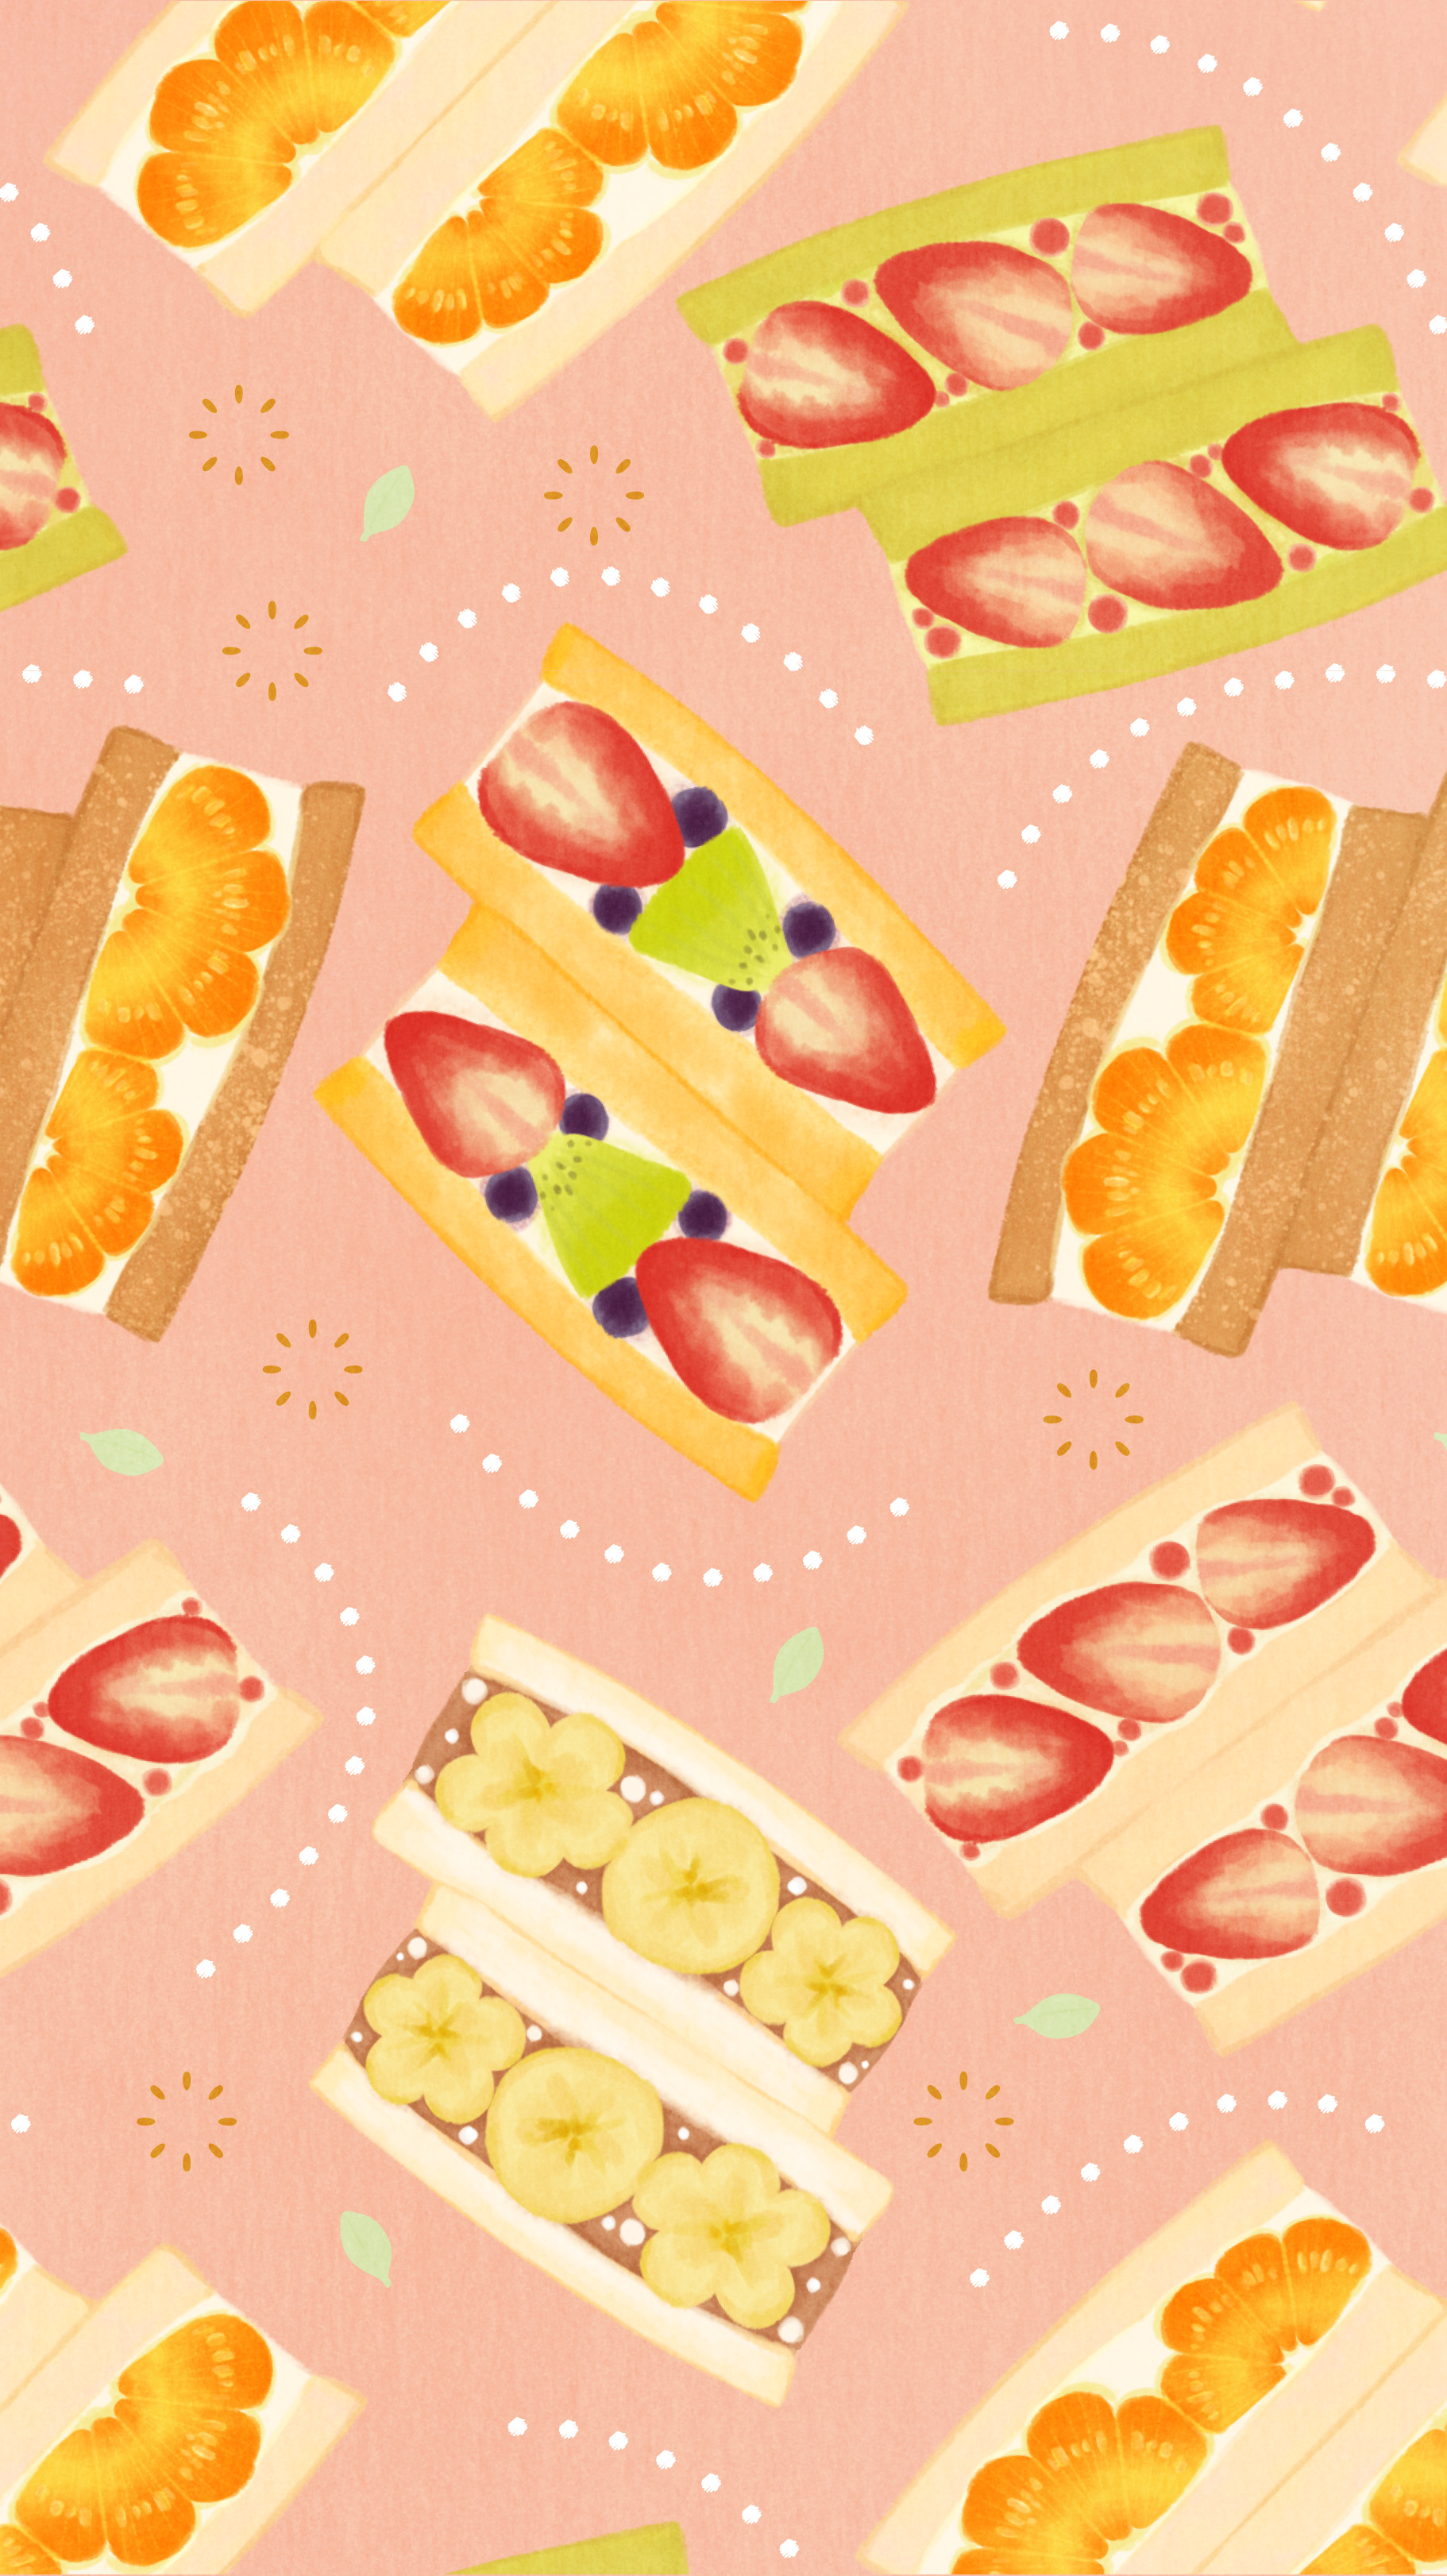 טוויטר Omiyu בטוויטר フルーツサンドな壁紙 フルーツサンド イラスト サンドイッチ フルーツ いちご バナナ 壁紙 みかん Sandwich Fruits Fruitssand Strawberry Illust Sweets T Co 3jof4zkcx4